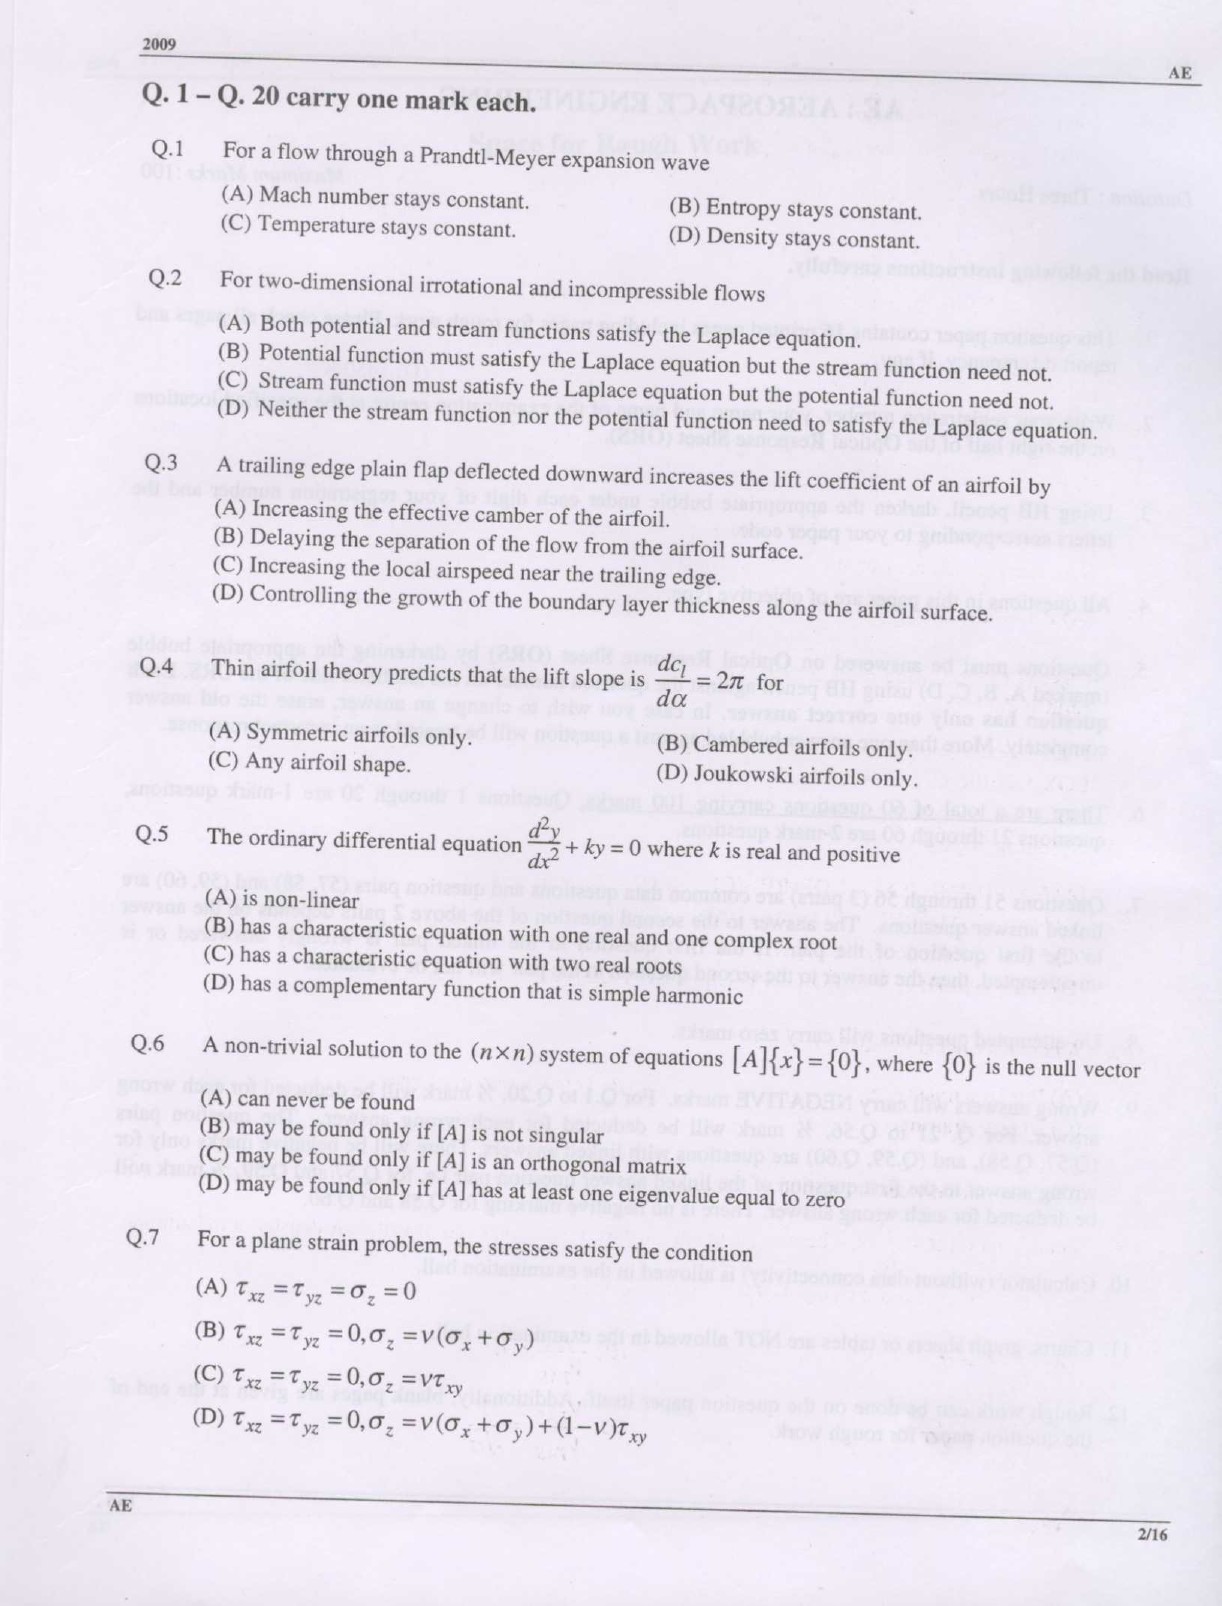 GATE Exam 2009 Aerospace Engineering Question Paper 2